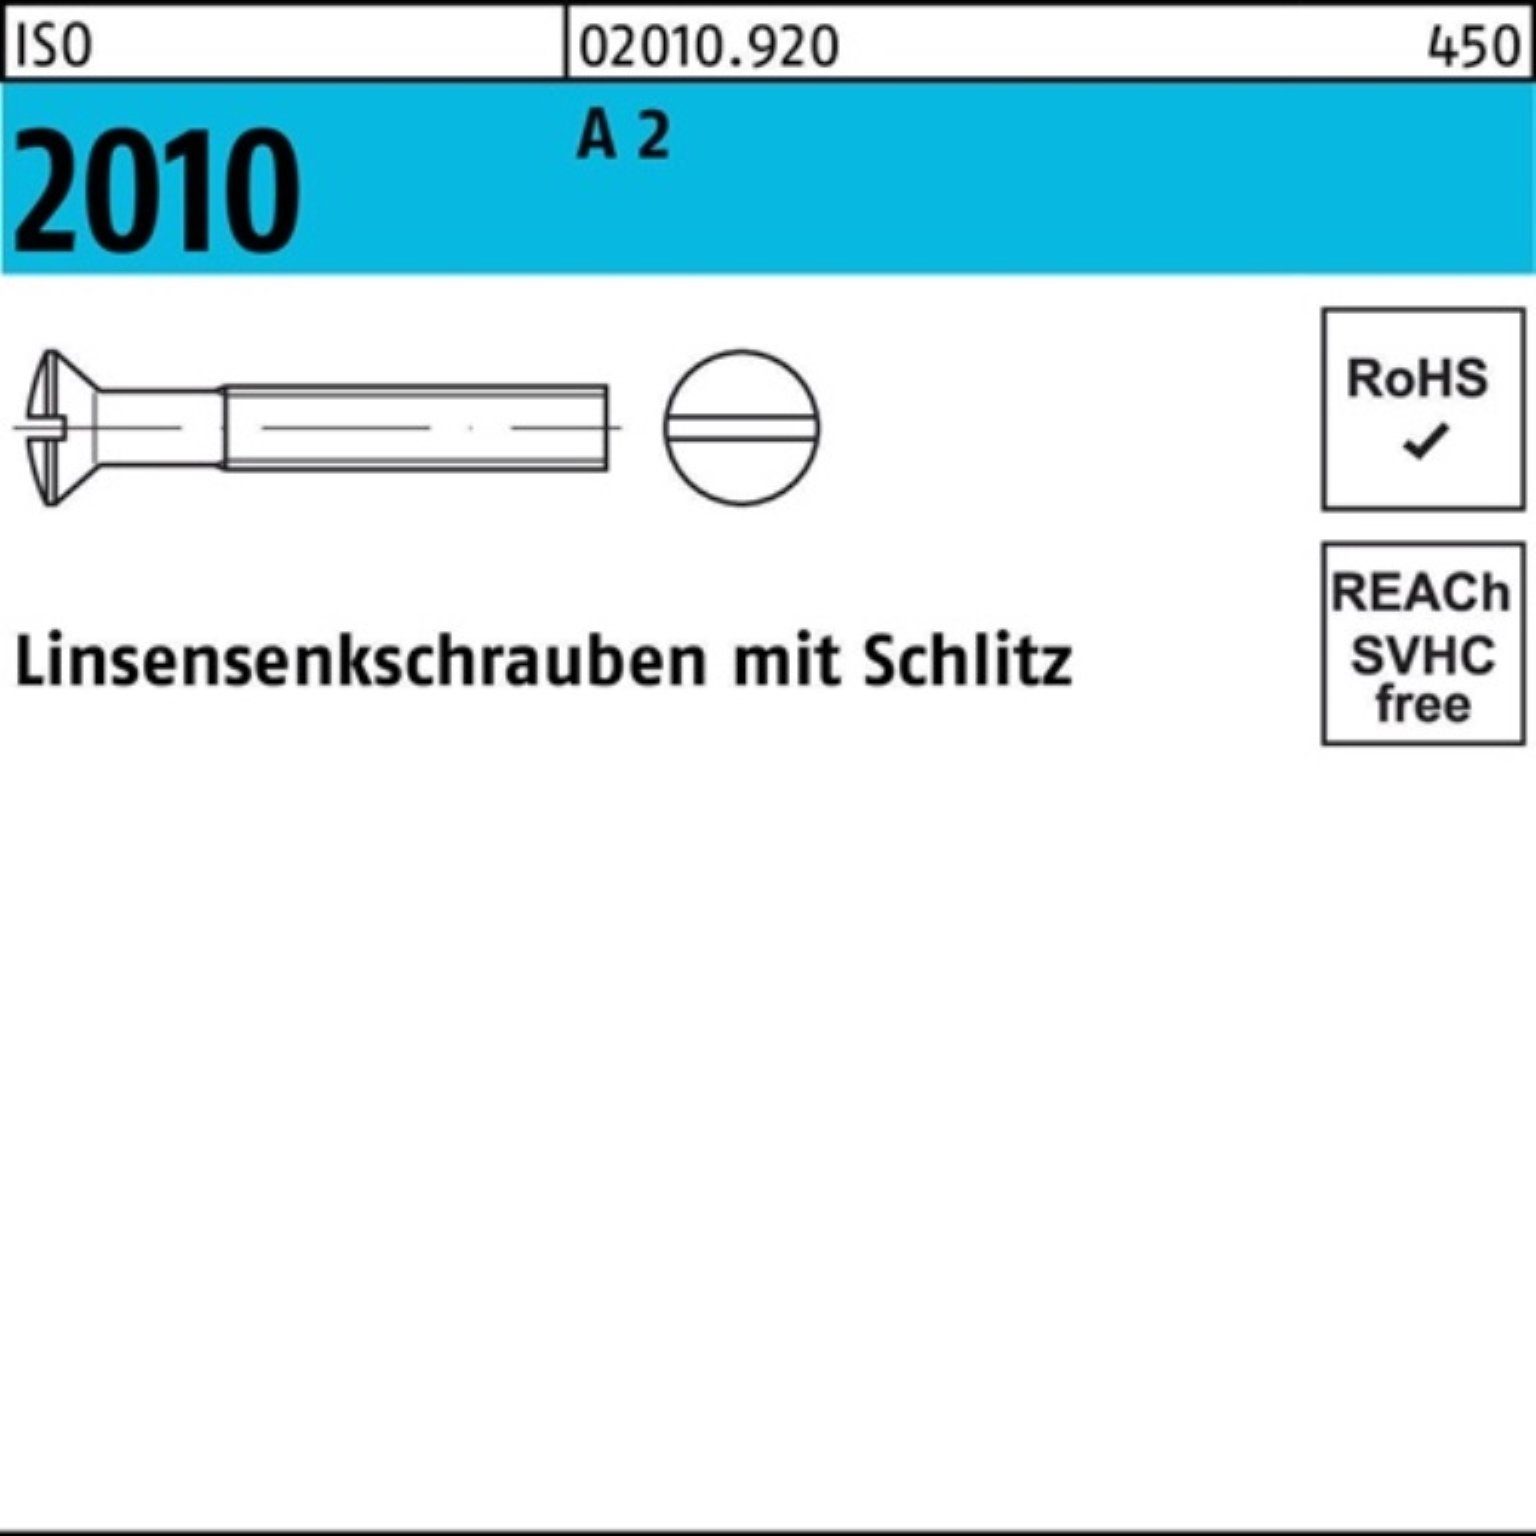 A 2 Reyher IS Linsensenkschraube ISO 6 2010 M3x 200 200er Linsenschraube Schlitz Stück Pack